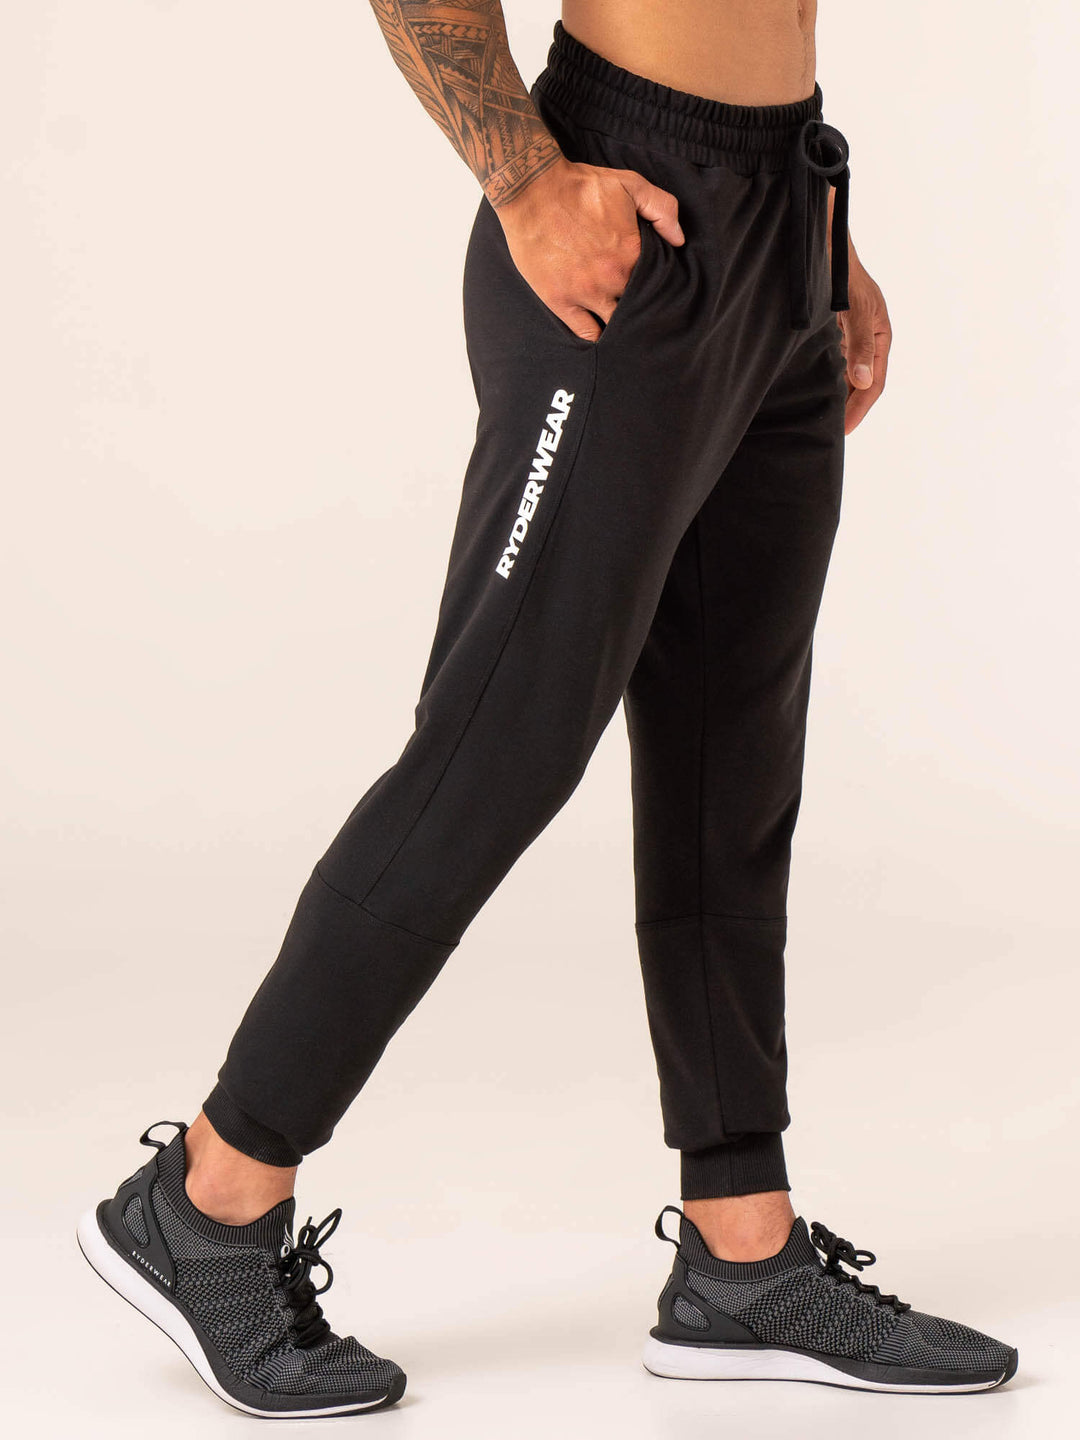 Emerge Track Pant - Faded Black Clothing Ryderwear 